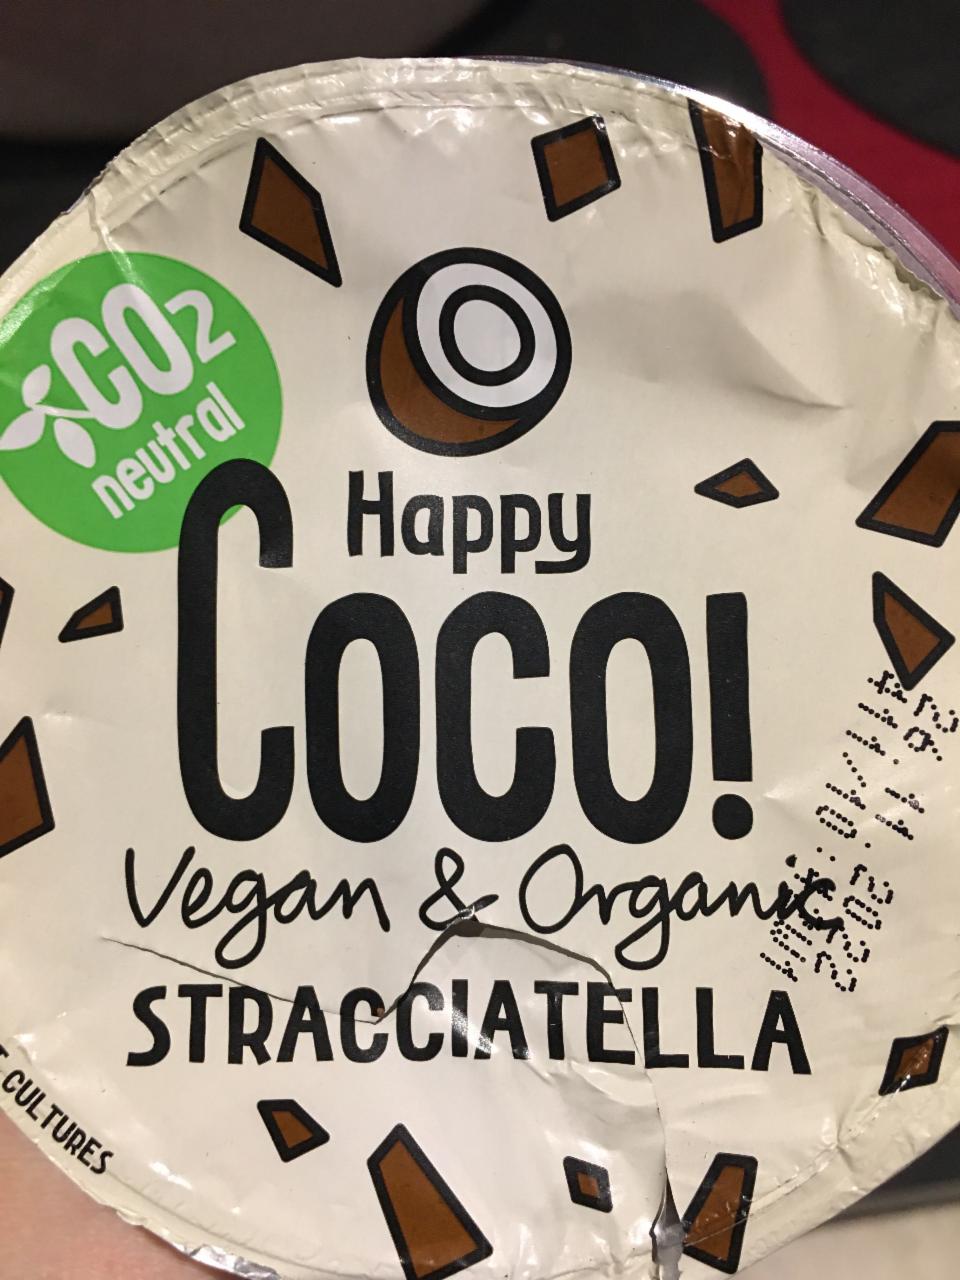 Fotografie - Vegan & Organic yogurt Stracciatella Happy Coco!